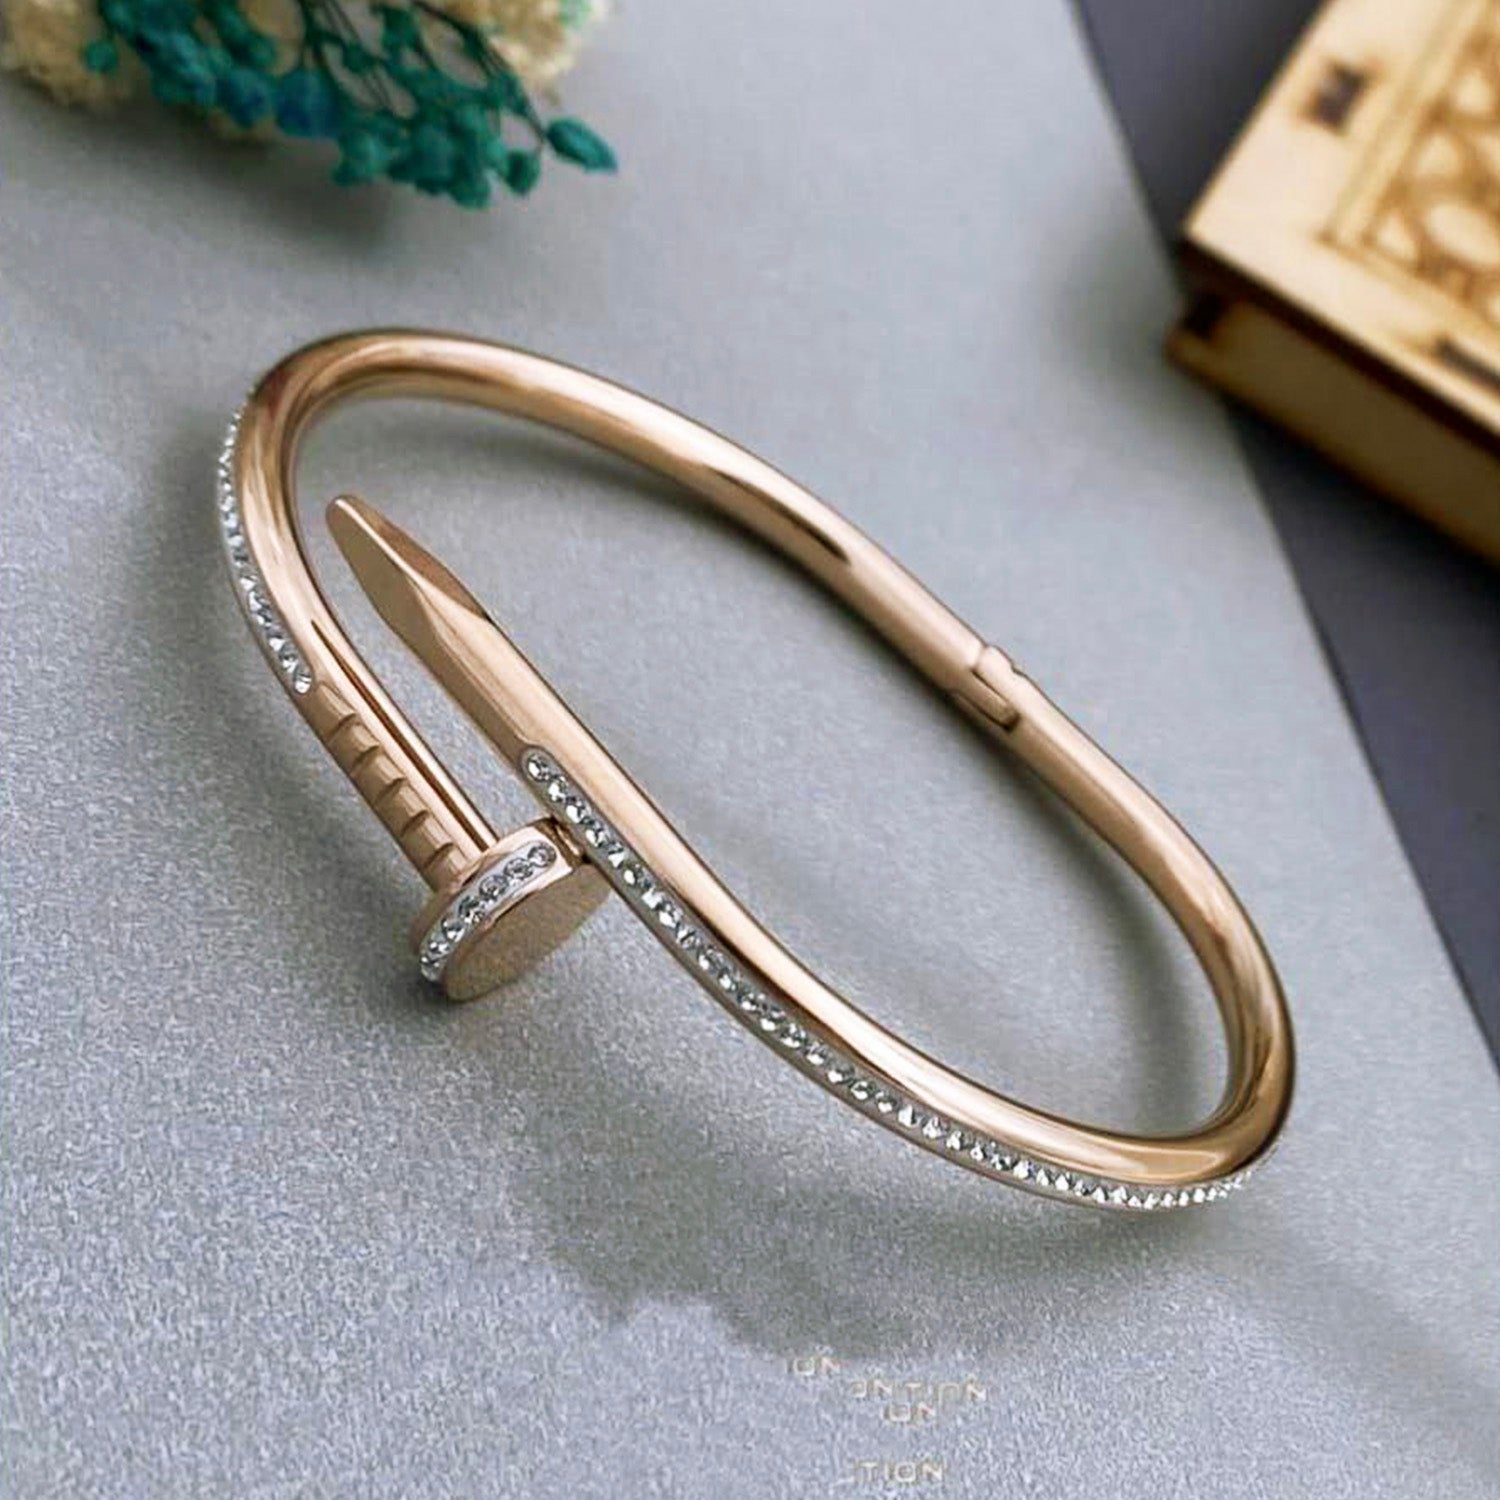 Buy Sleek Black Cartier Silver Bracelet Design @ ₹949 Only